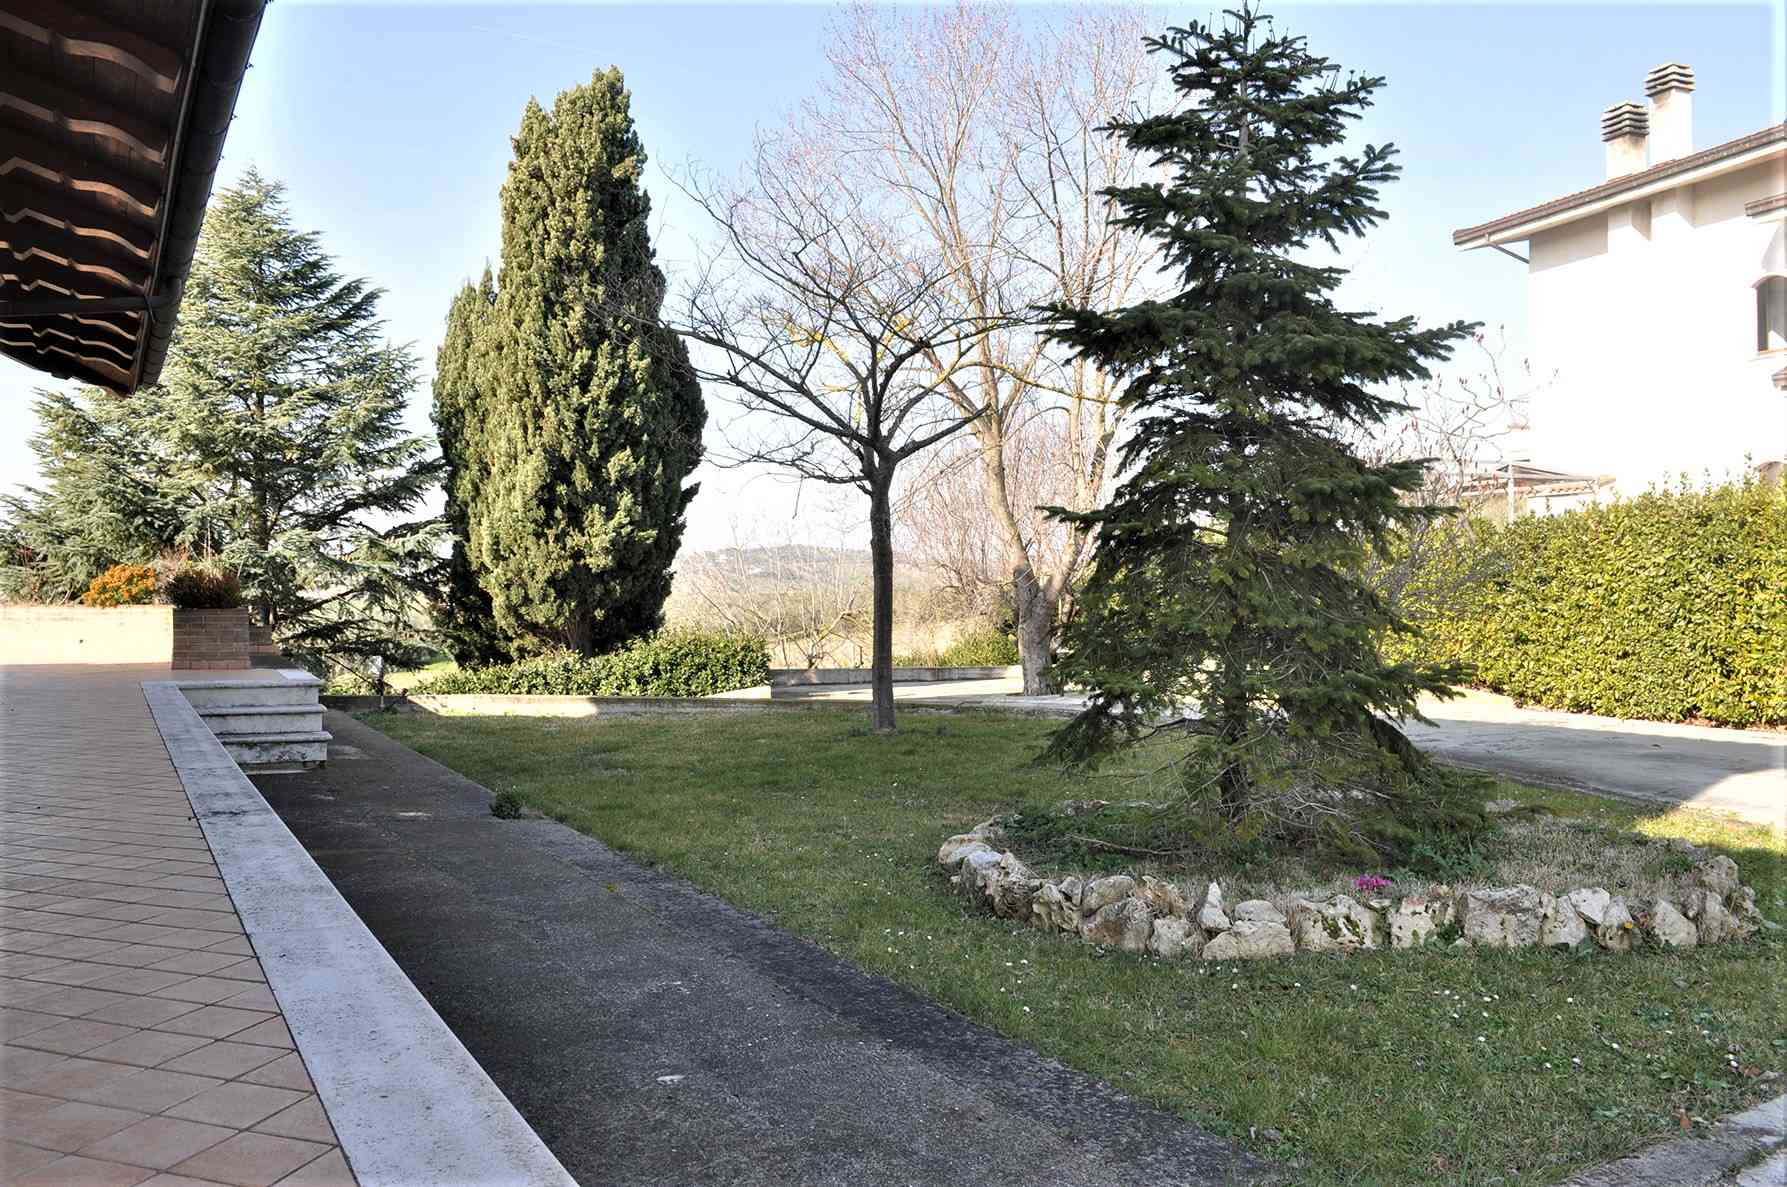 Villa Villa in vendita Tortoreto (TE), Villa Bianca - Tortoreto - EUR 567.877 450